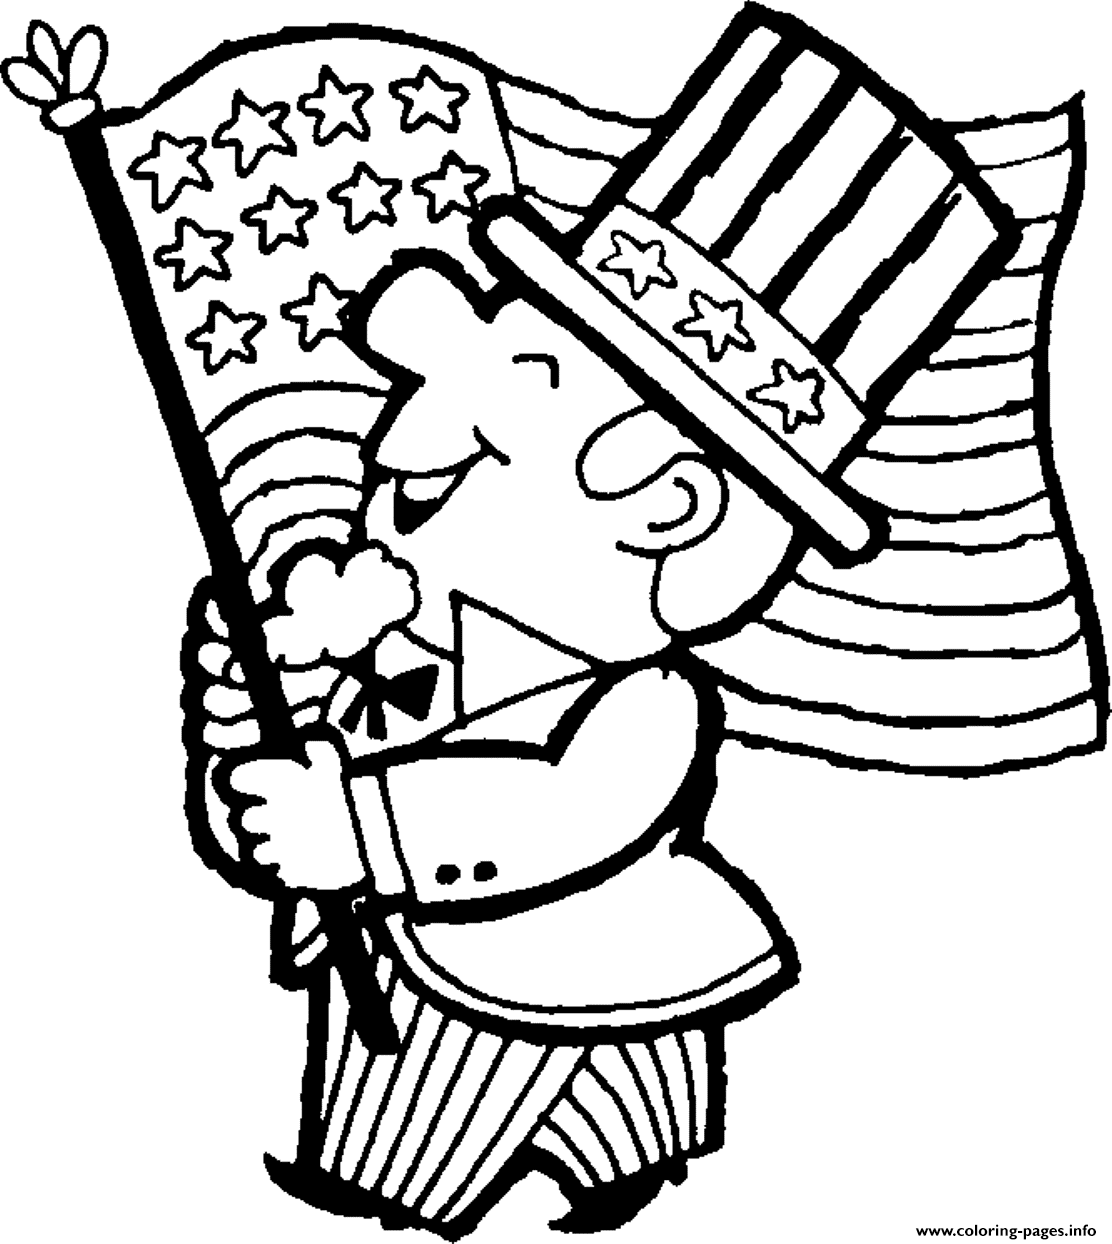 american-flag-kids9dbc-coloring-pages-printable